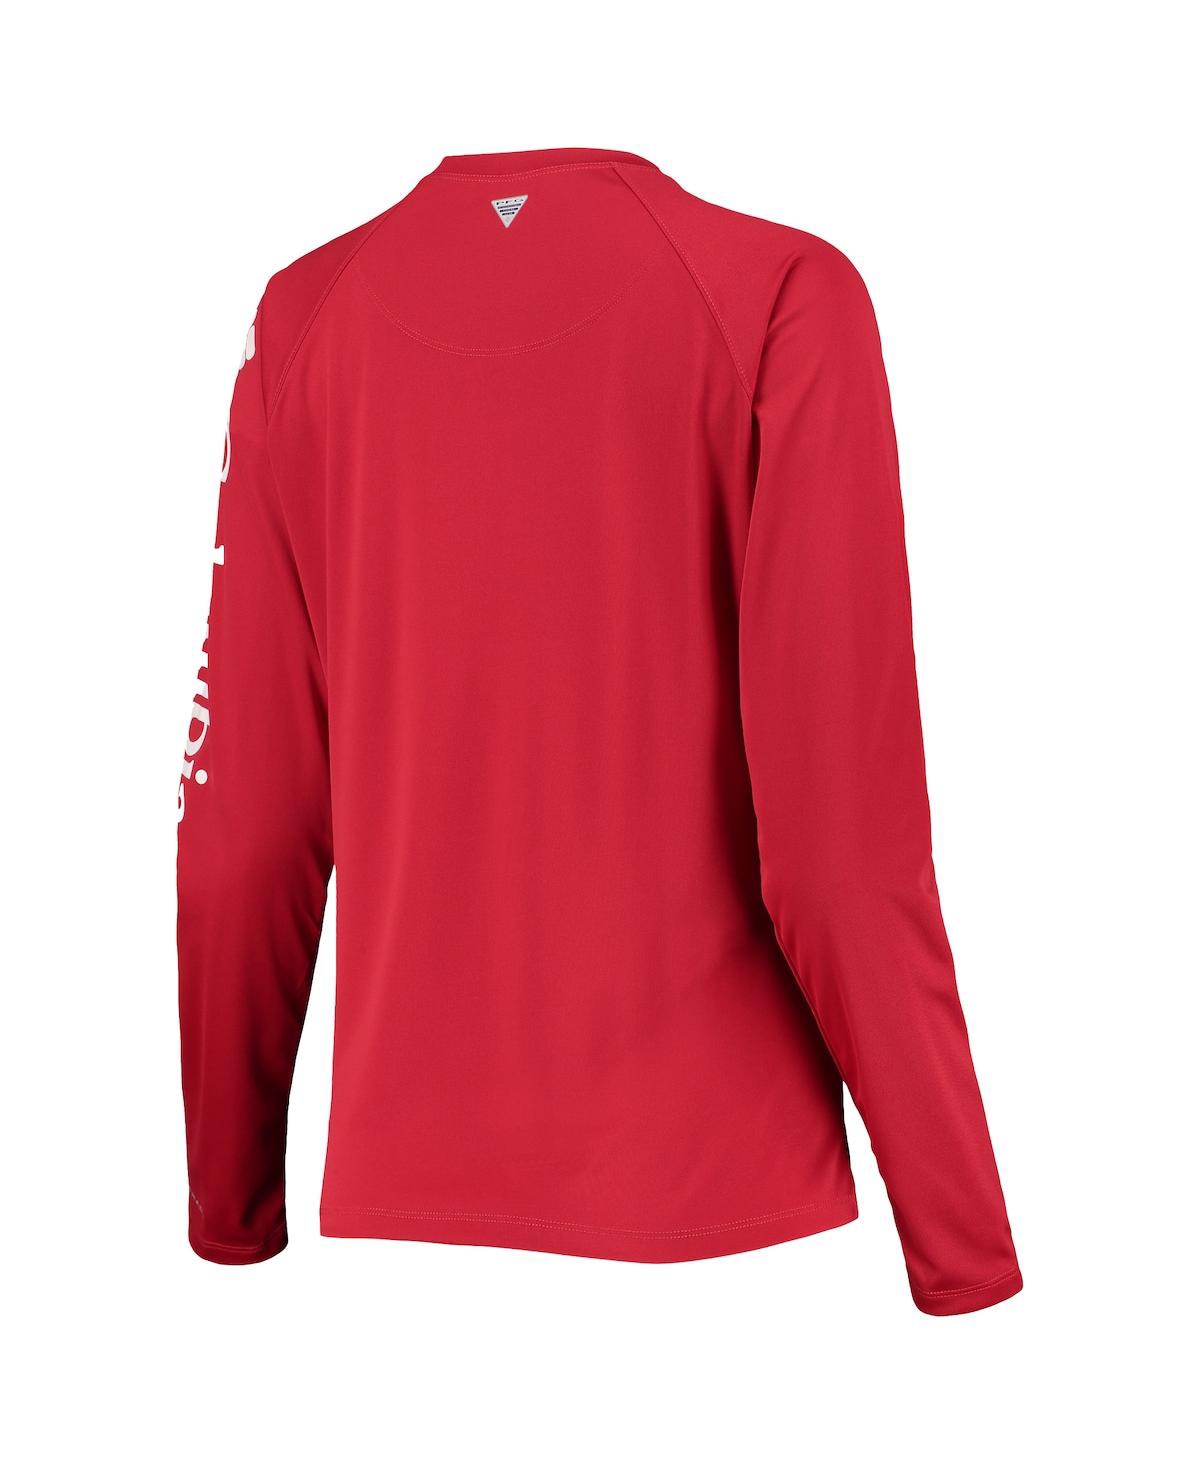 Shop Columbia Women's  Scarlet Ohio State Buckeyes Pfg Tidal Long Sleeve T-shirt